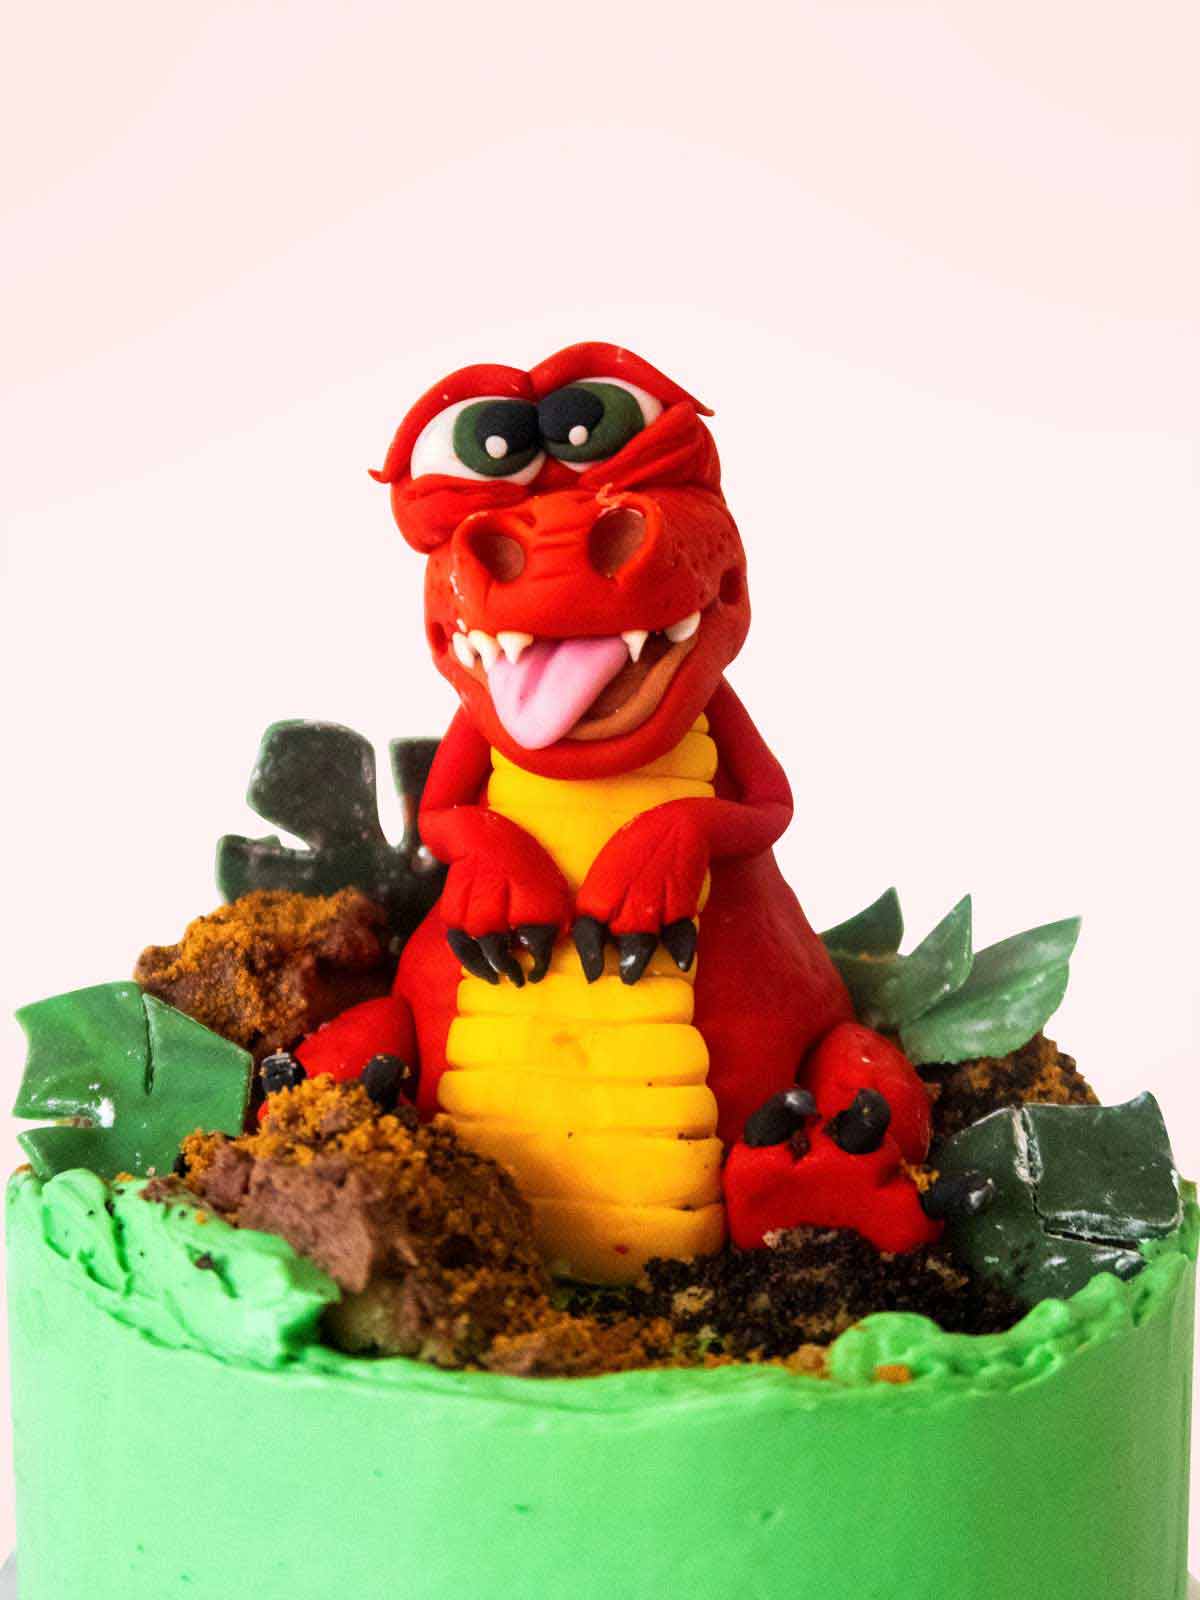 T-Rex Dinosaur Birthday Cake Delivery London Surrey